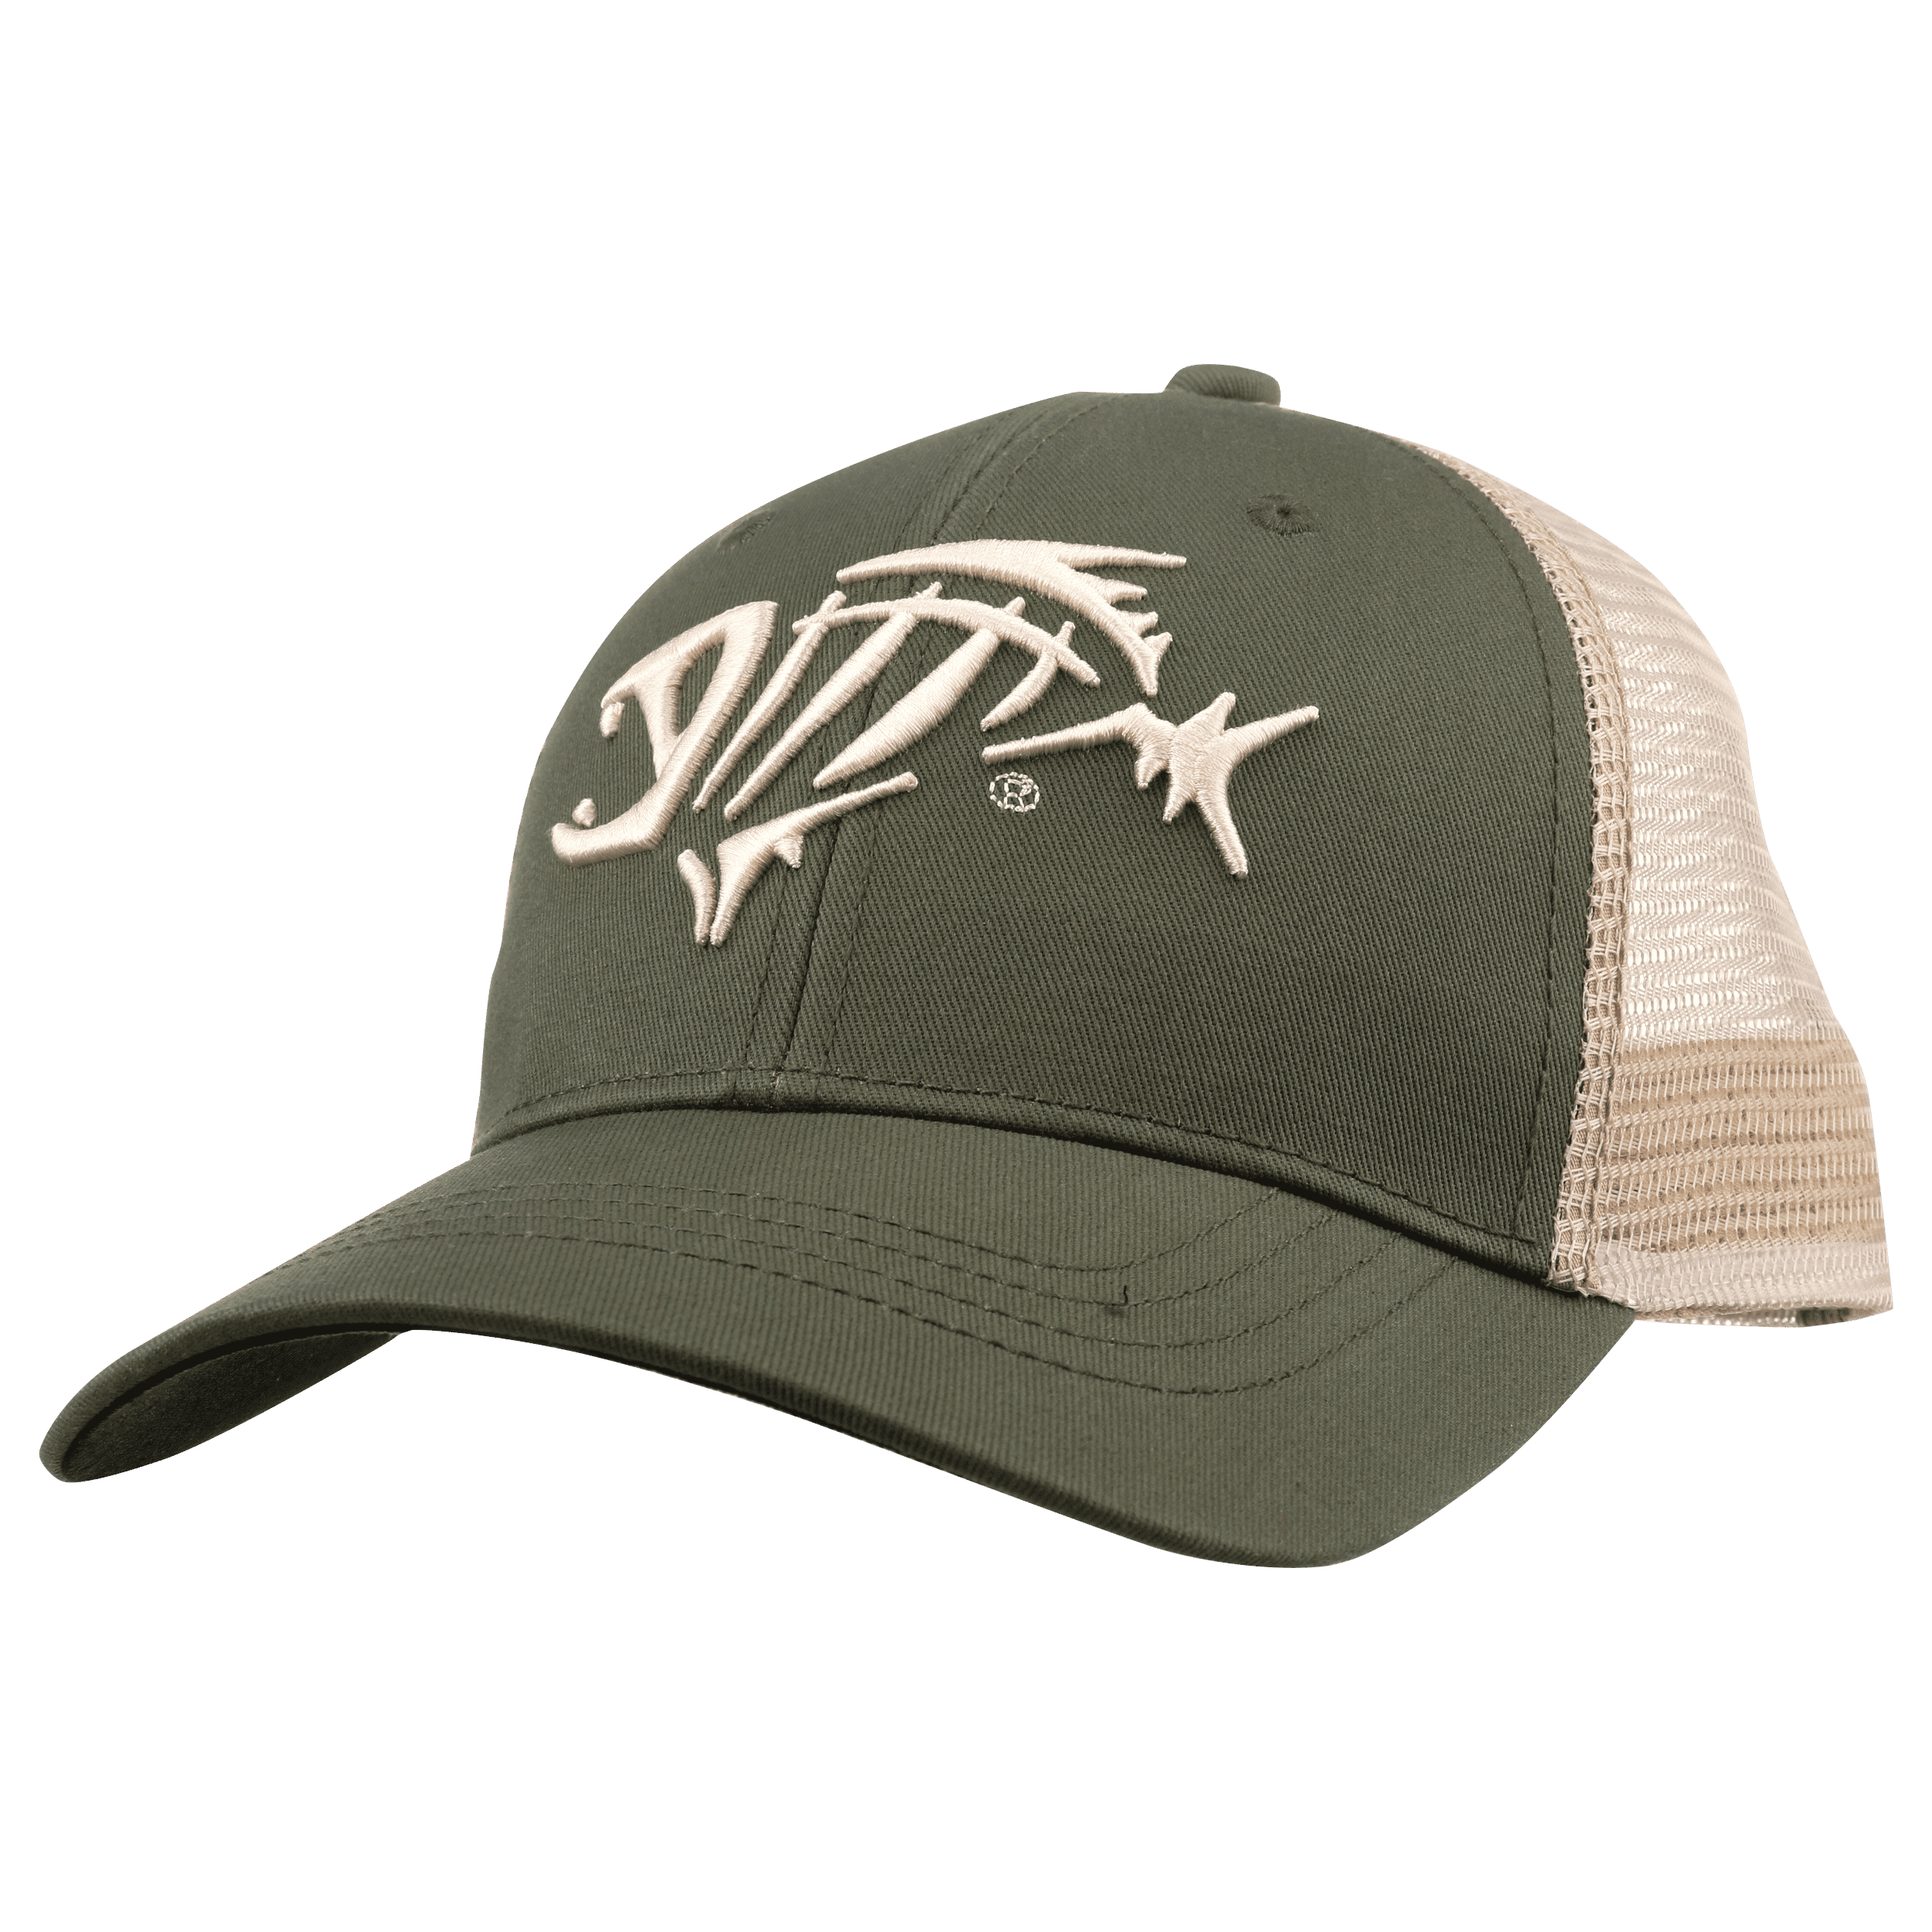 Gloomis Fishing Bandit Trucker Cap - Green, One Size Fits Most  [GHATBANTCGN] 